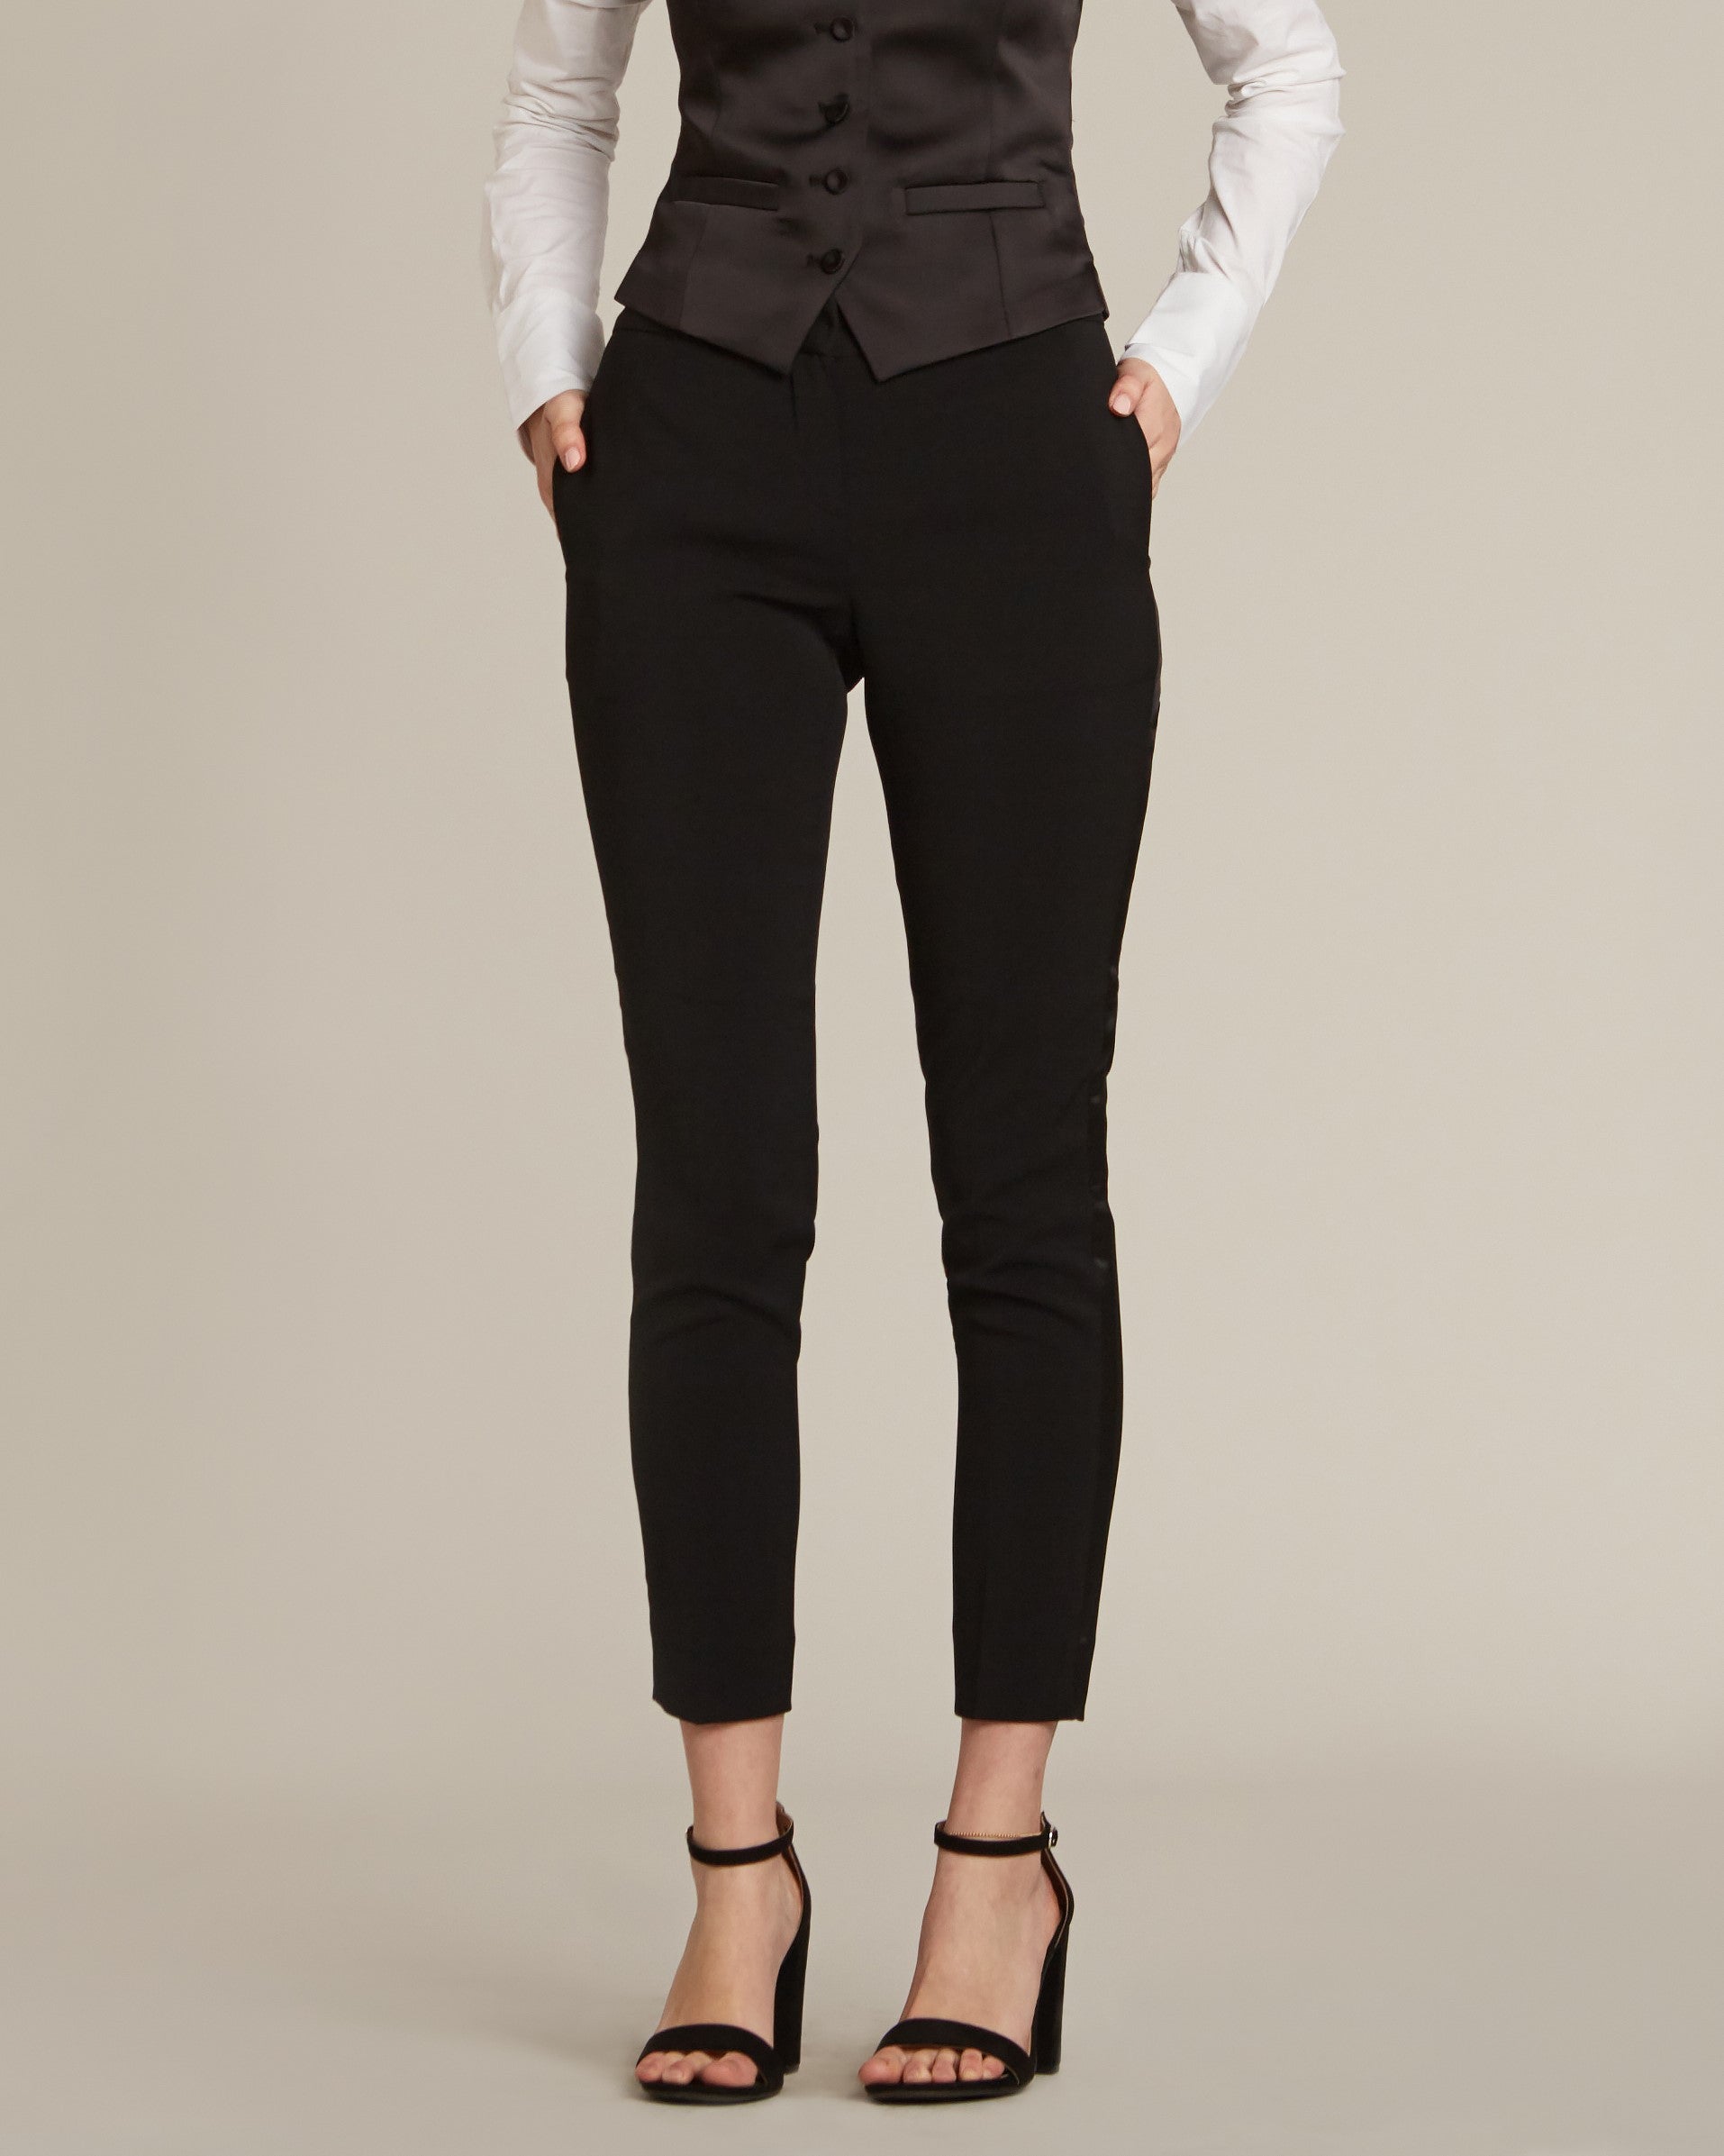 Black Ultra Slim Fit Tuxedo Pants w/ Satin Back Pocket